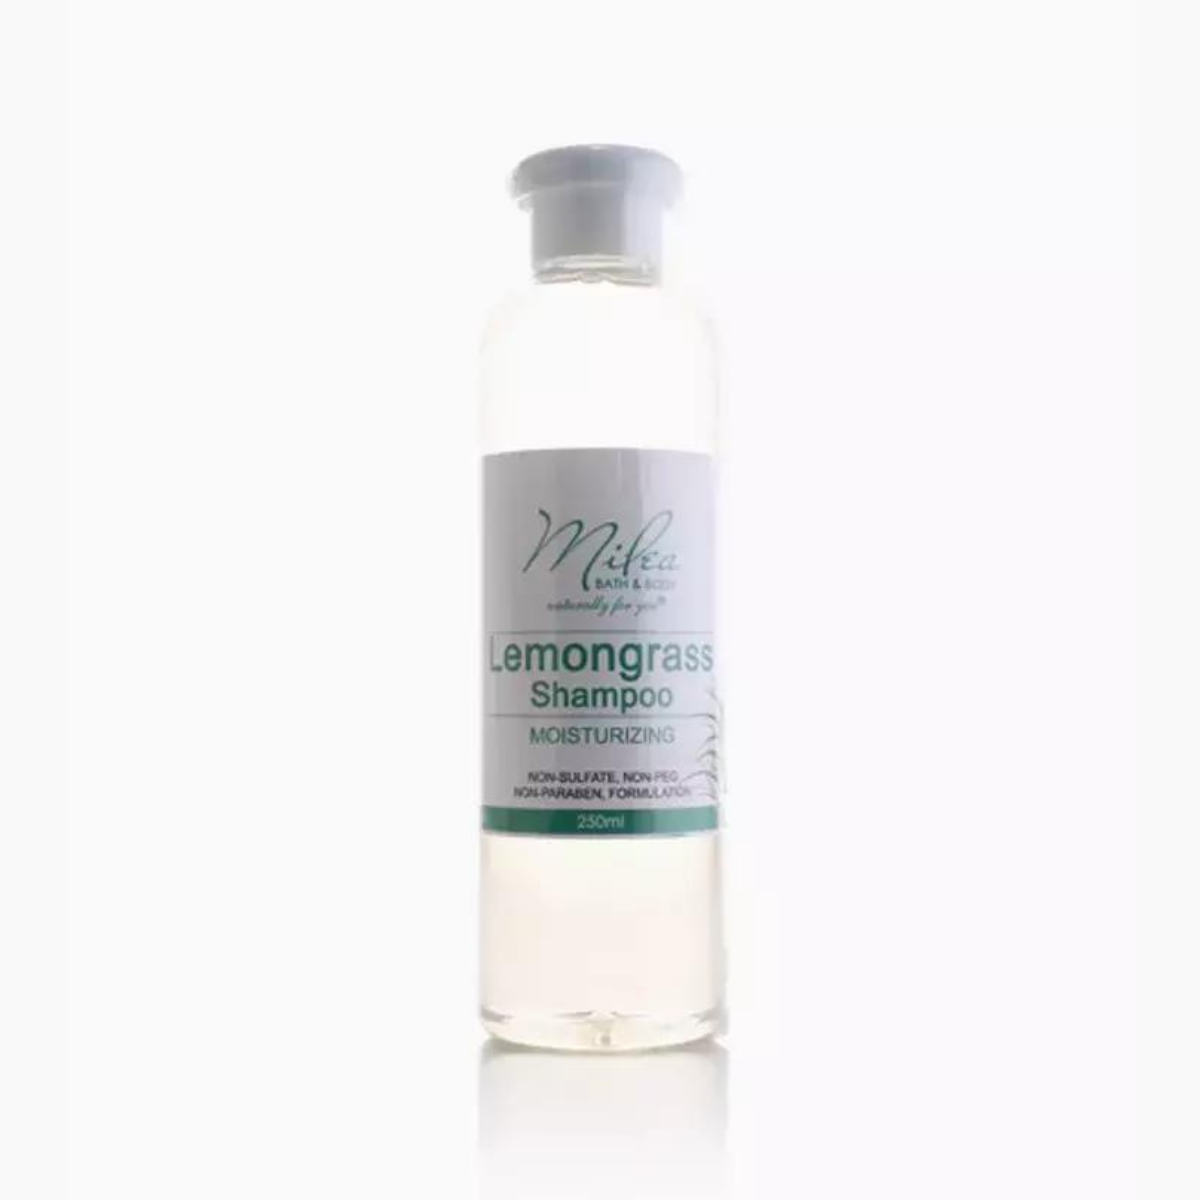 Milea All Organics Lemongrass Shampoo 250ml